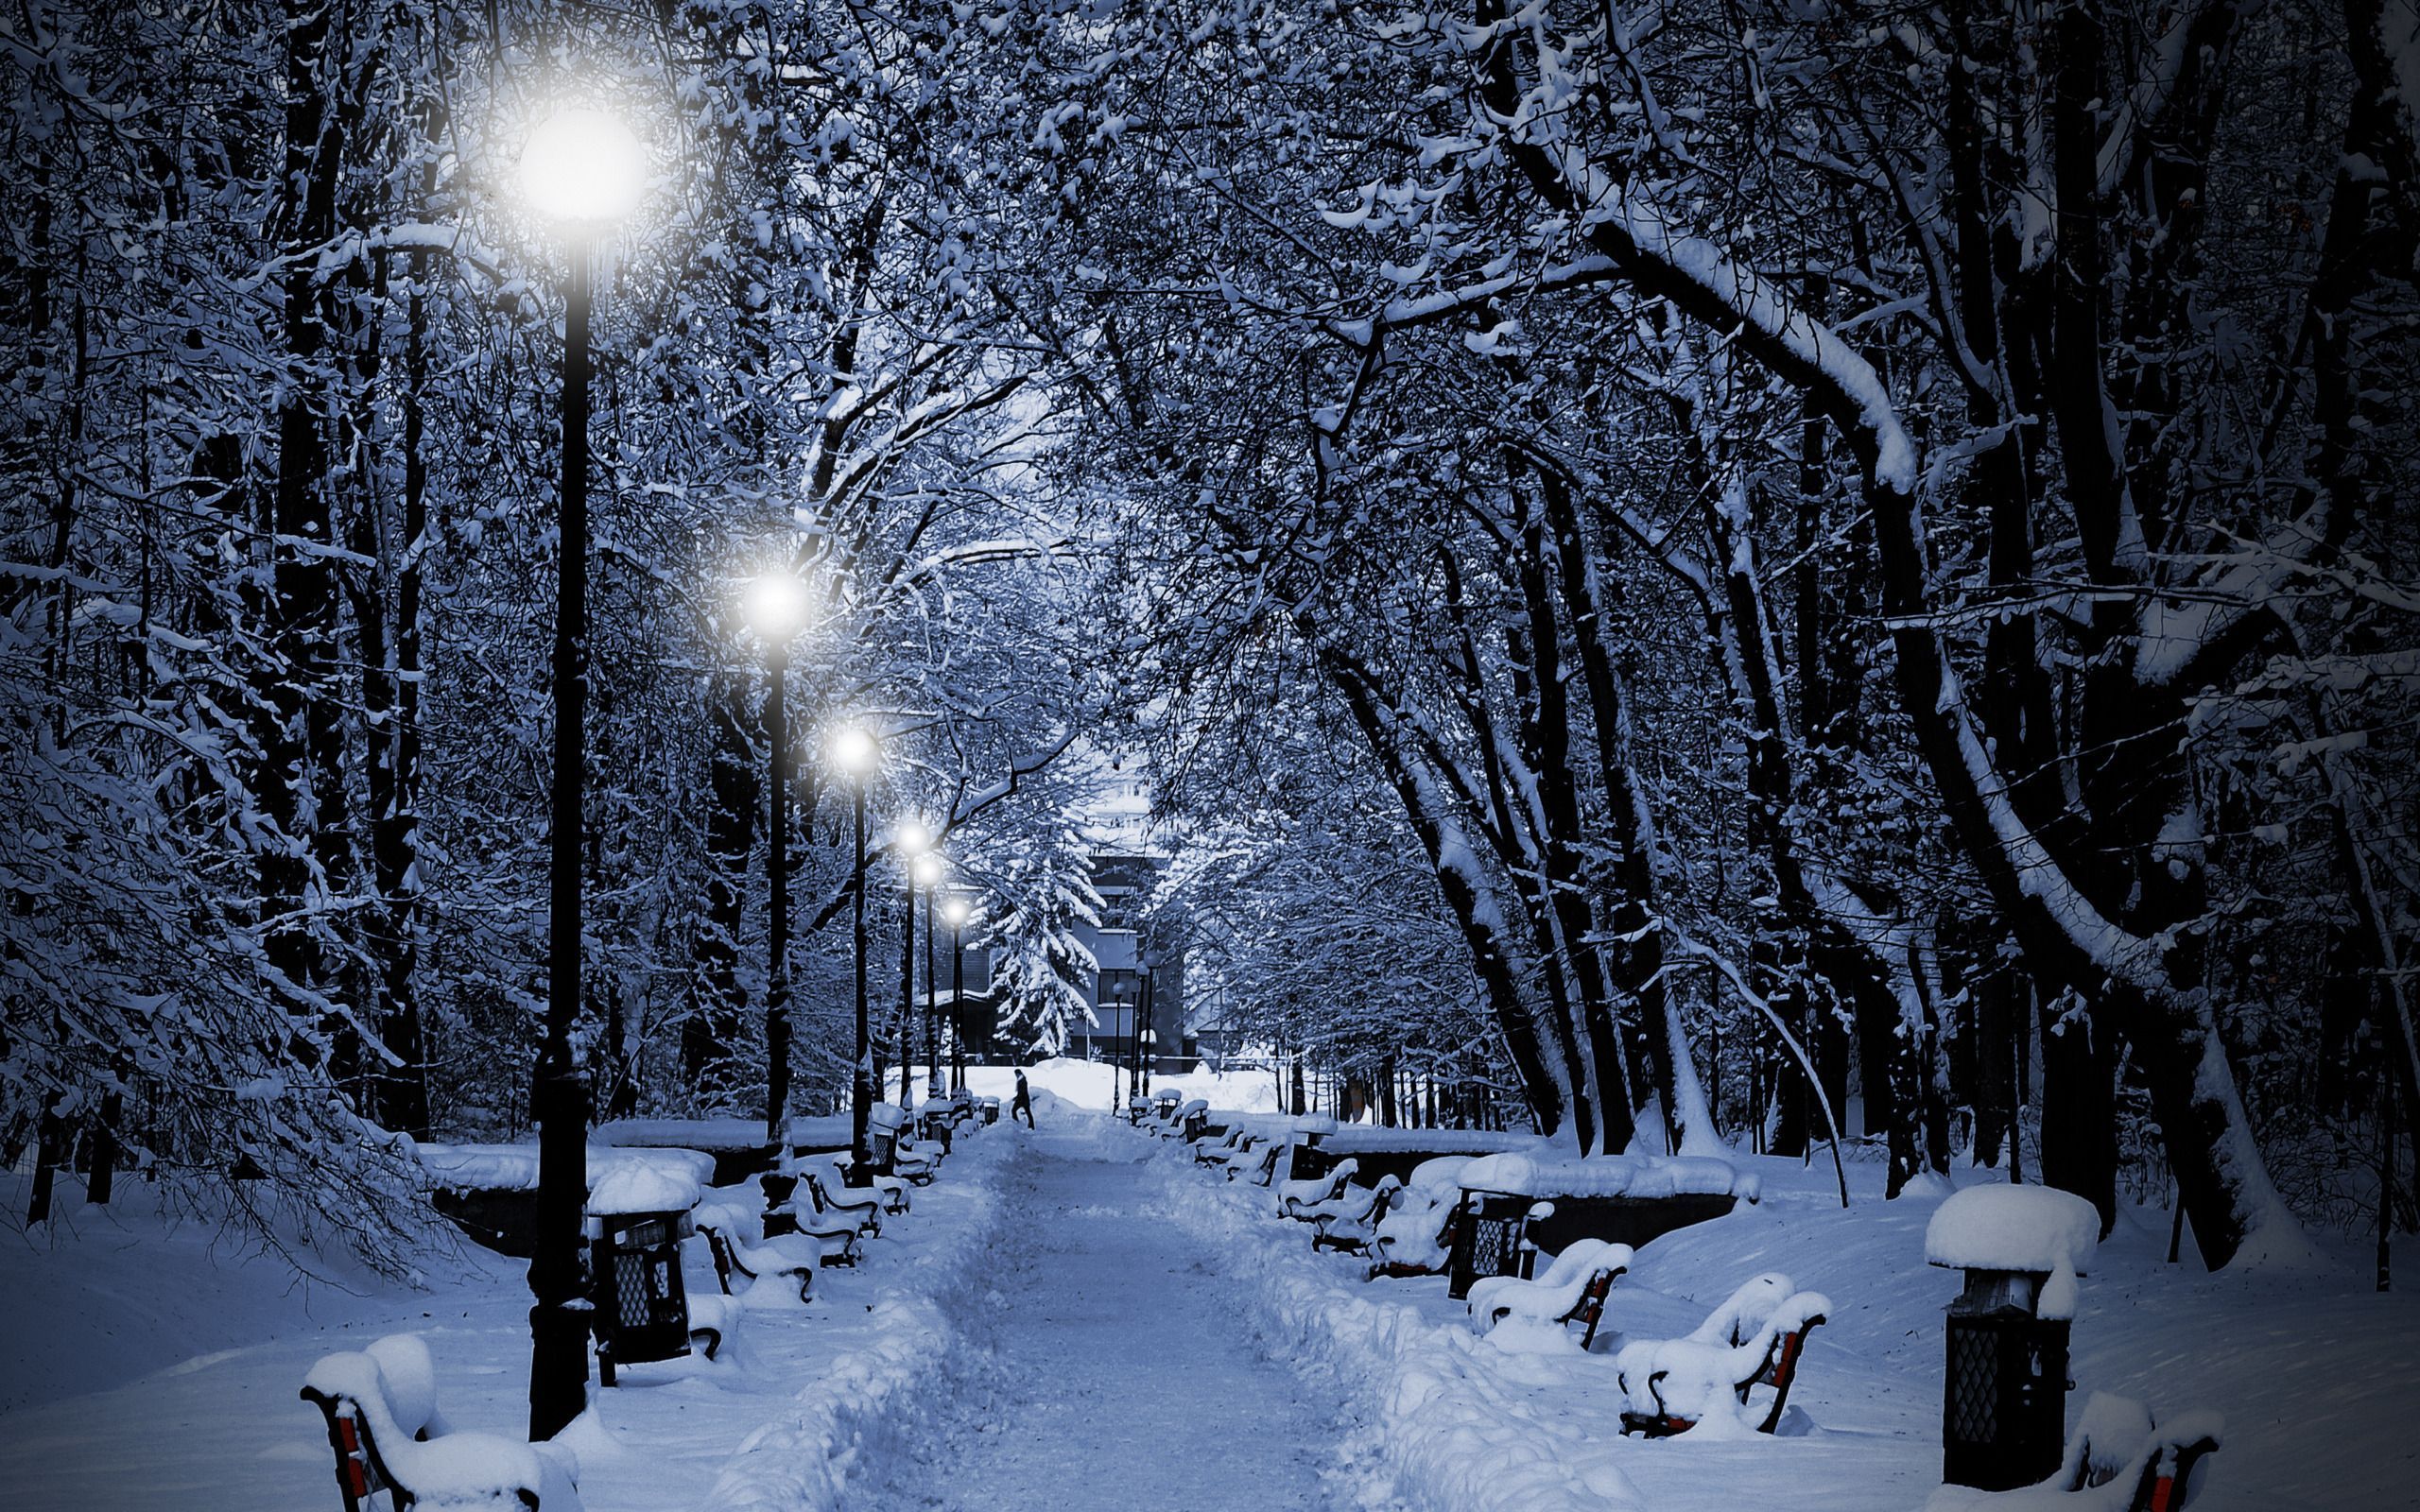 Romantic Winter Night Wallpaper Widescreen On Wallpaper 1080p HD. Winter scenery, Winter wallpaper, Winter picture